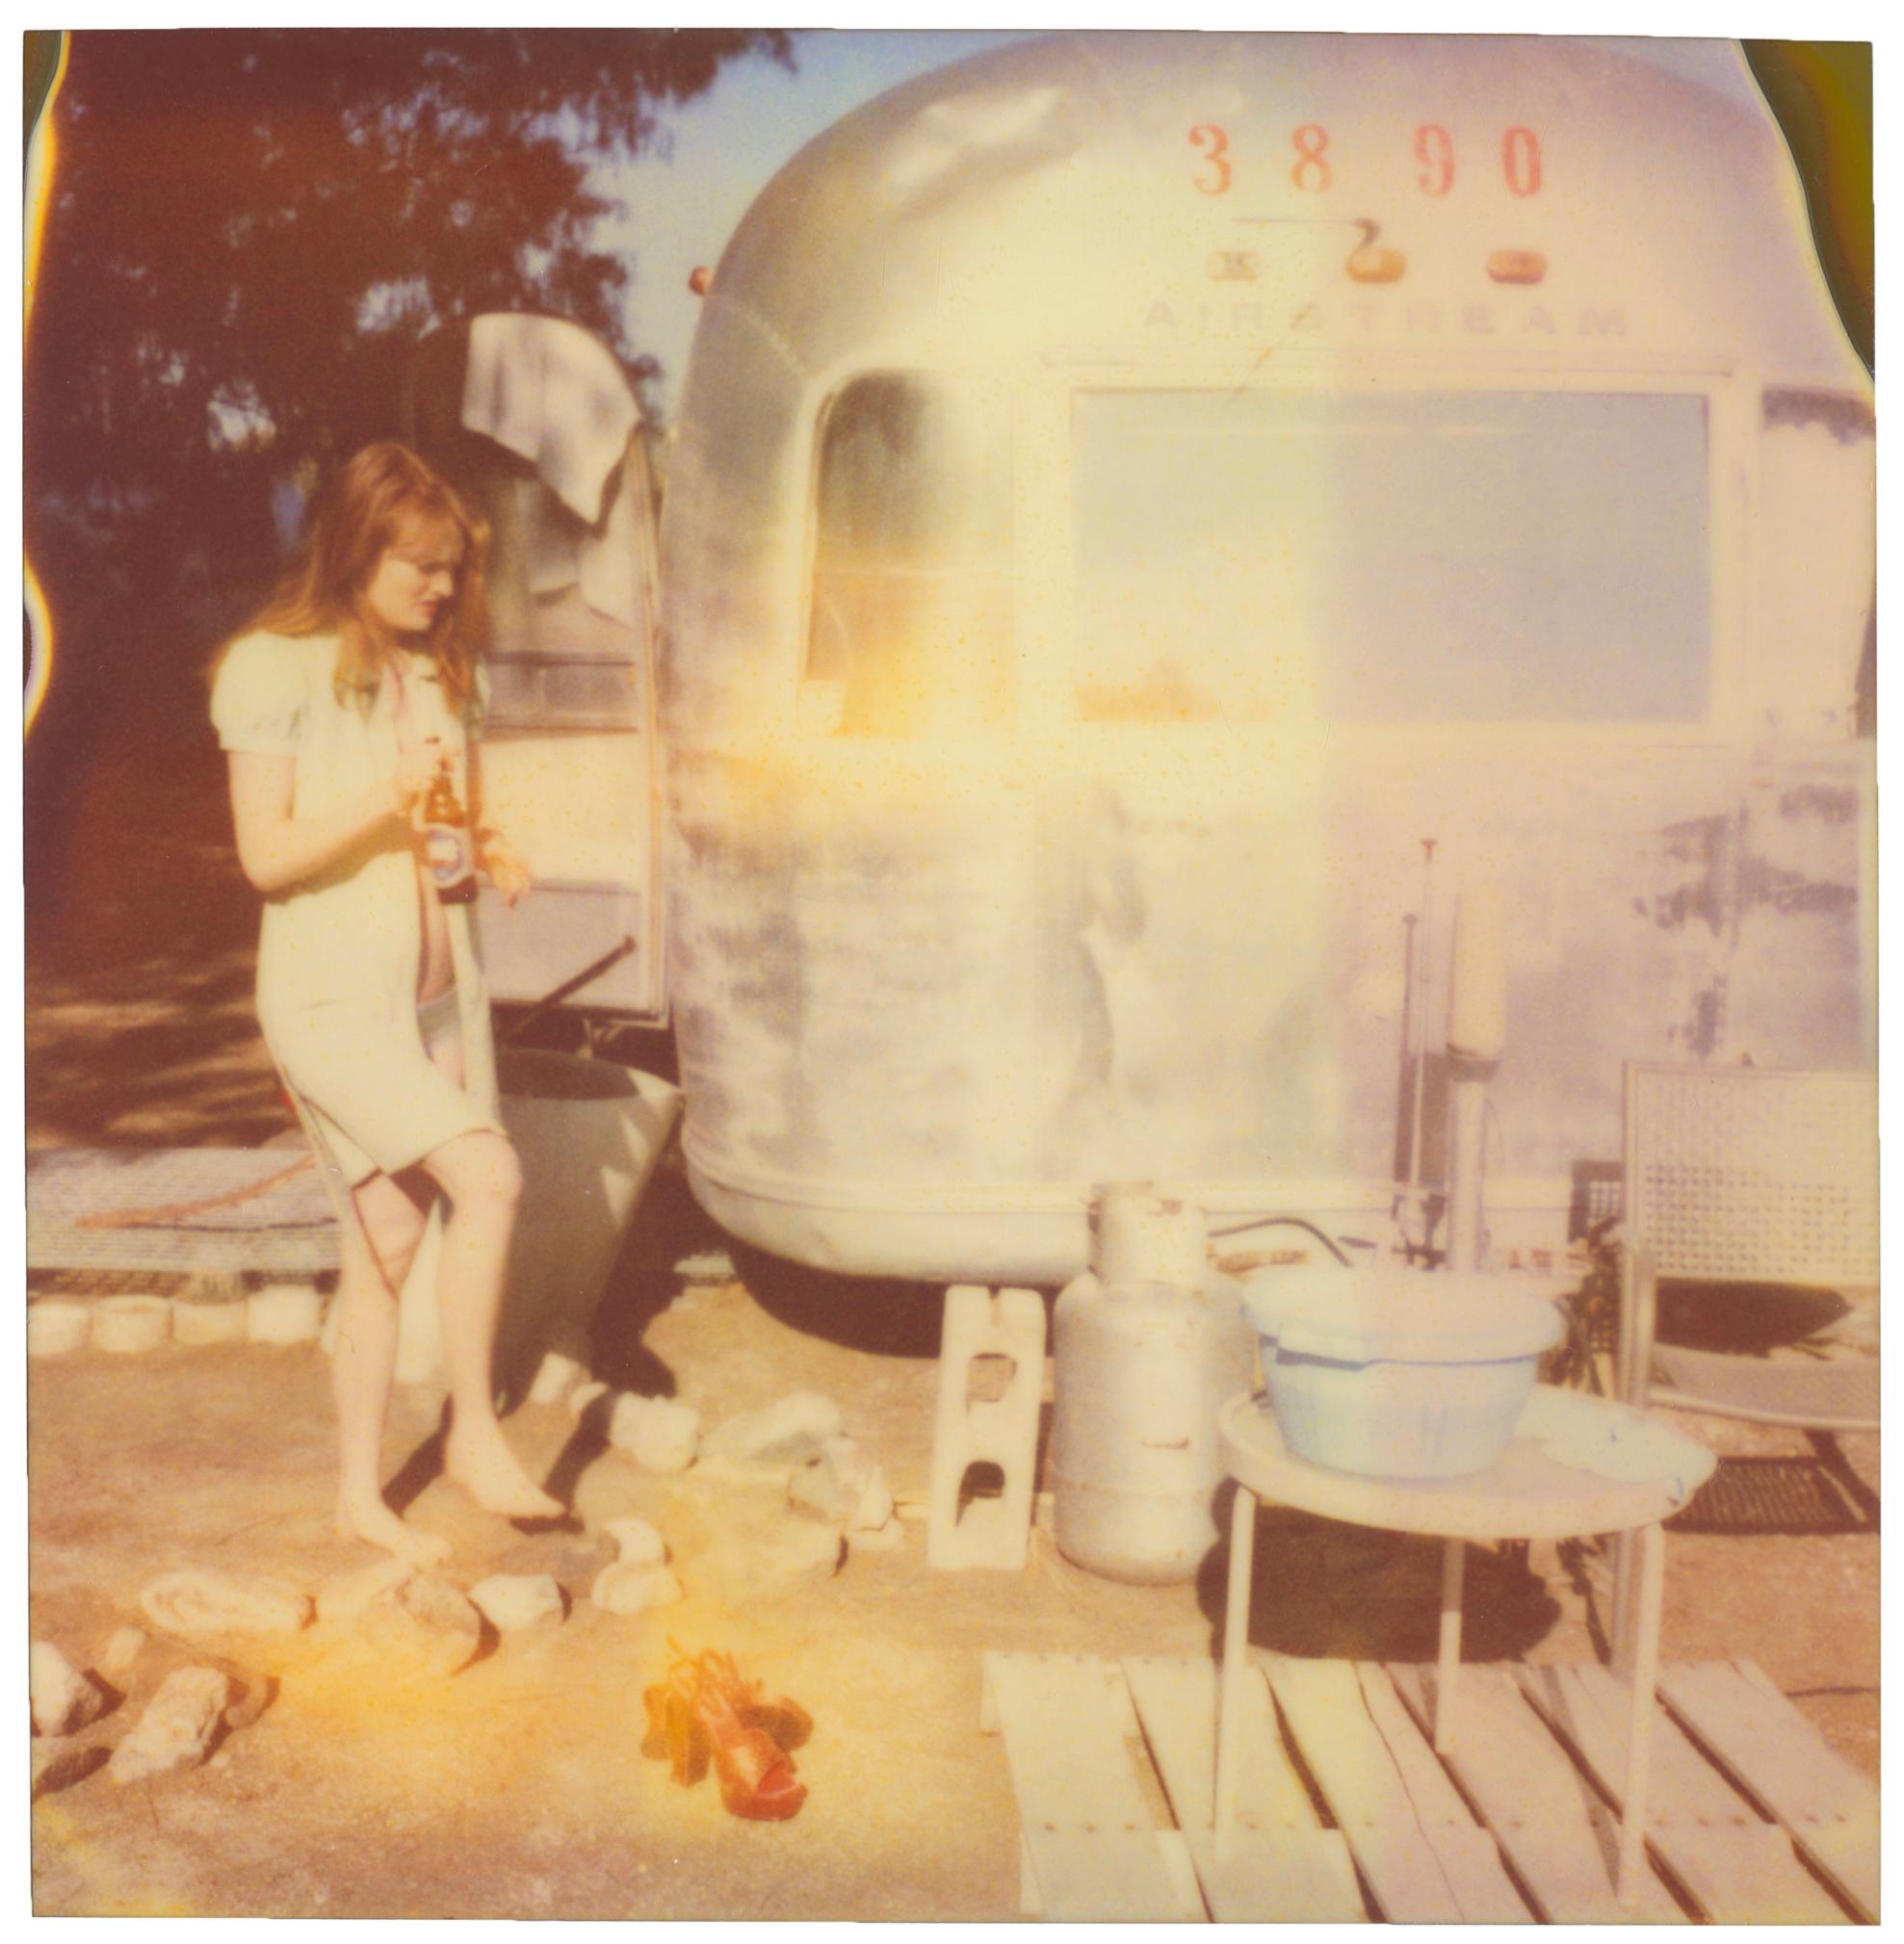 Color Photograph Stefanie Schneider - The Morning After (Till Death do us Part) - Contemporain, Polaroid, Femmes